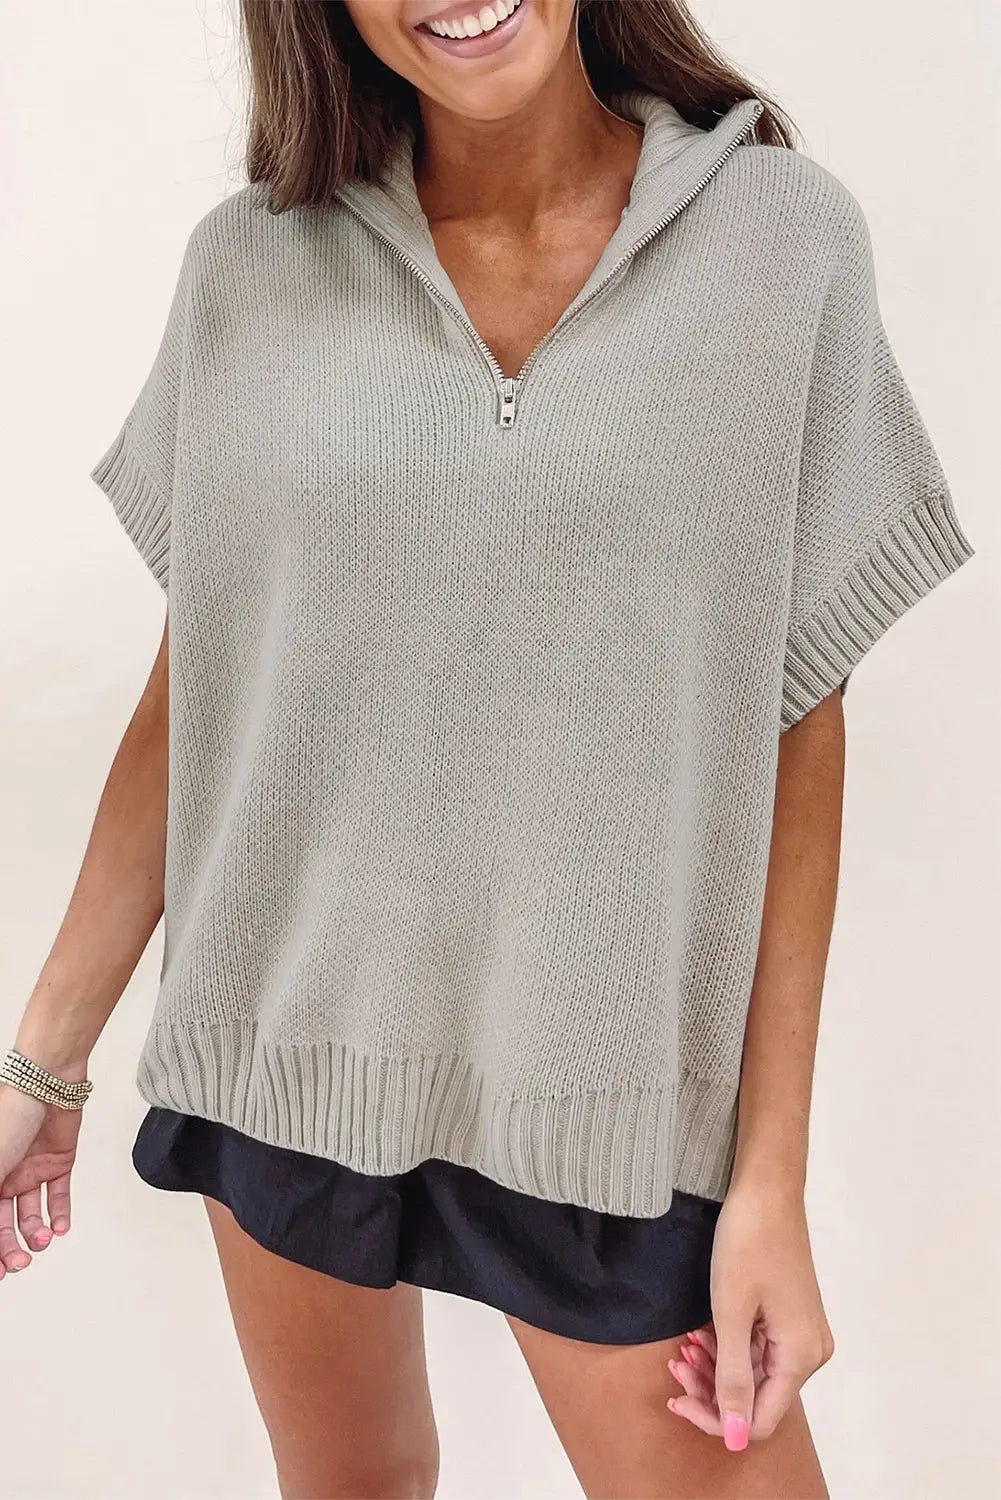 Black quarter zip short batwing sleeve sweater - light grey / l / 55% acrylic + 45% cotton - sweaters & cardigans